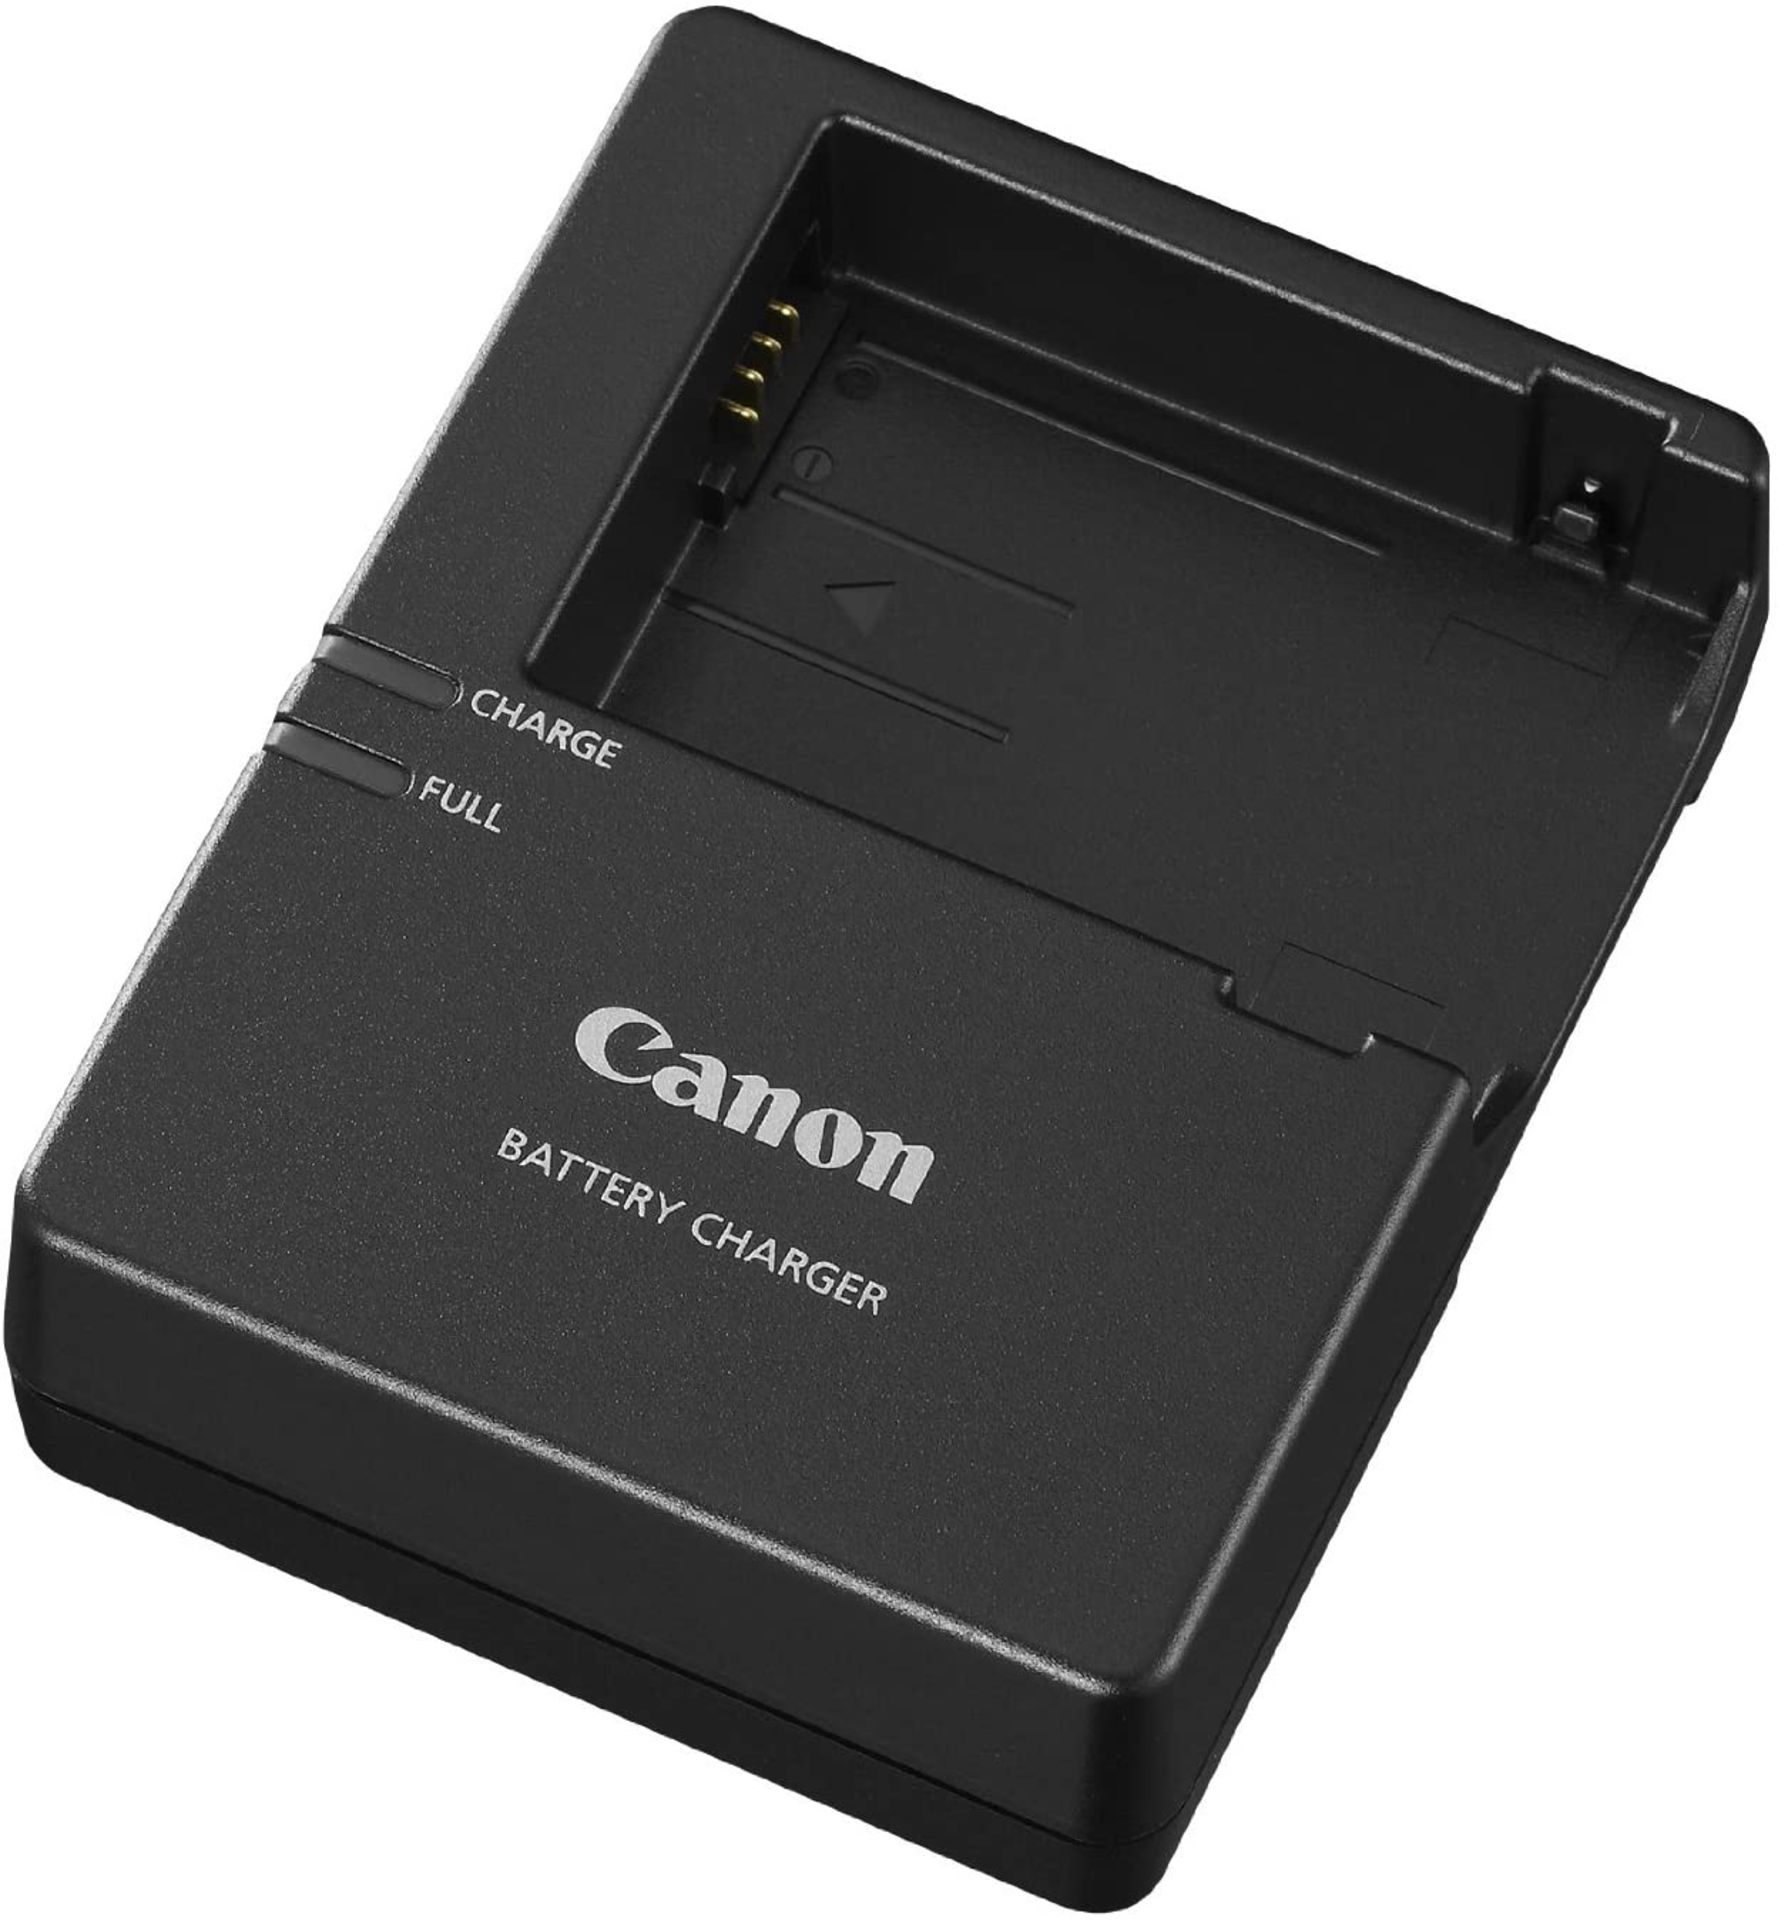 (M43) Canon LC-E8E Battery Charger (for Canon EOS 700D/600D/650D) Battery charger unit for Cano... - Image 2 of 2